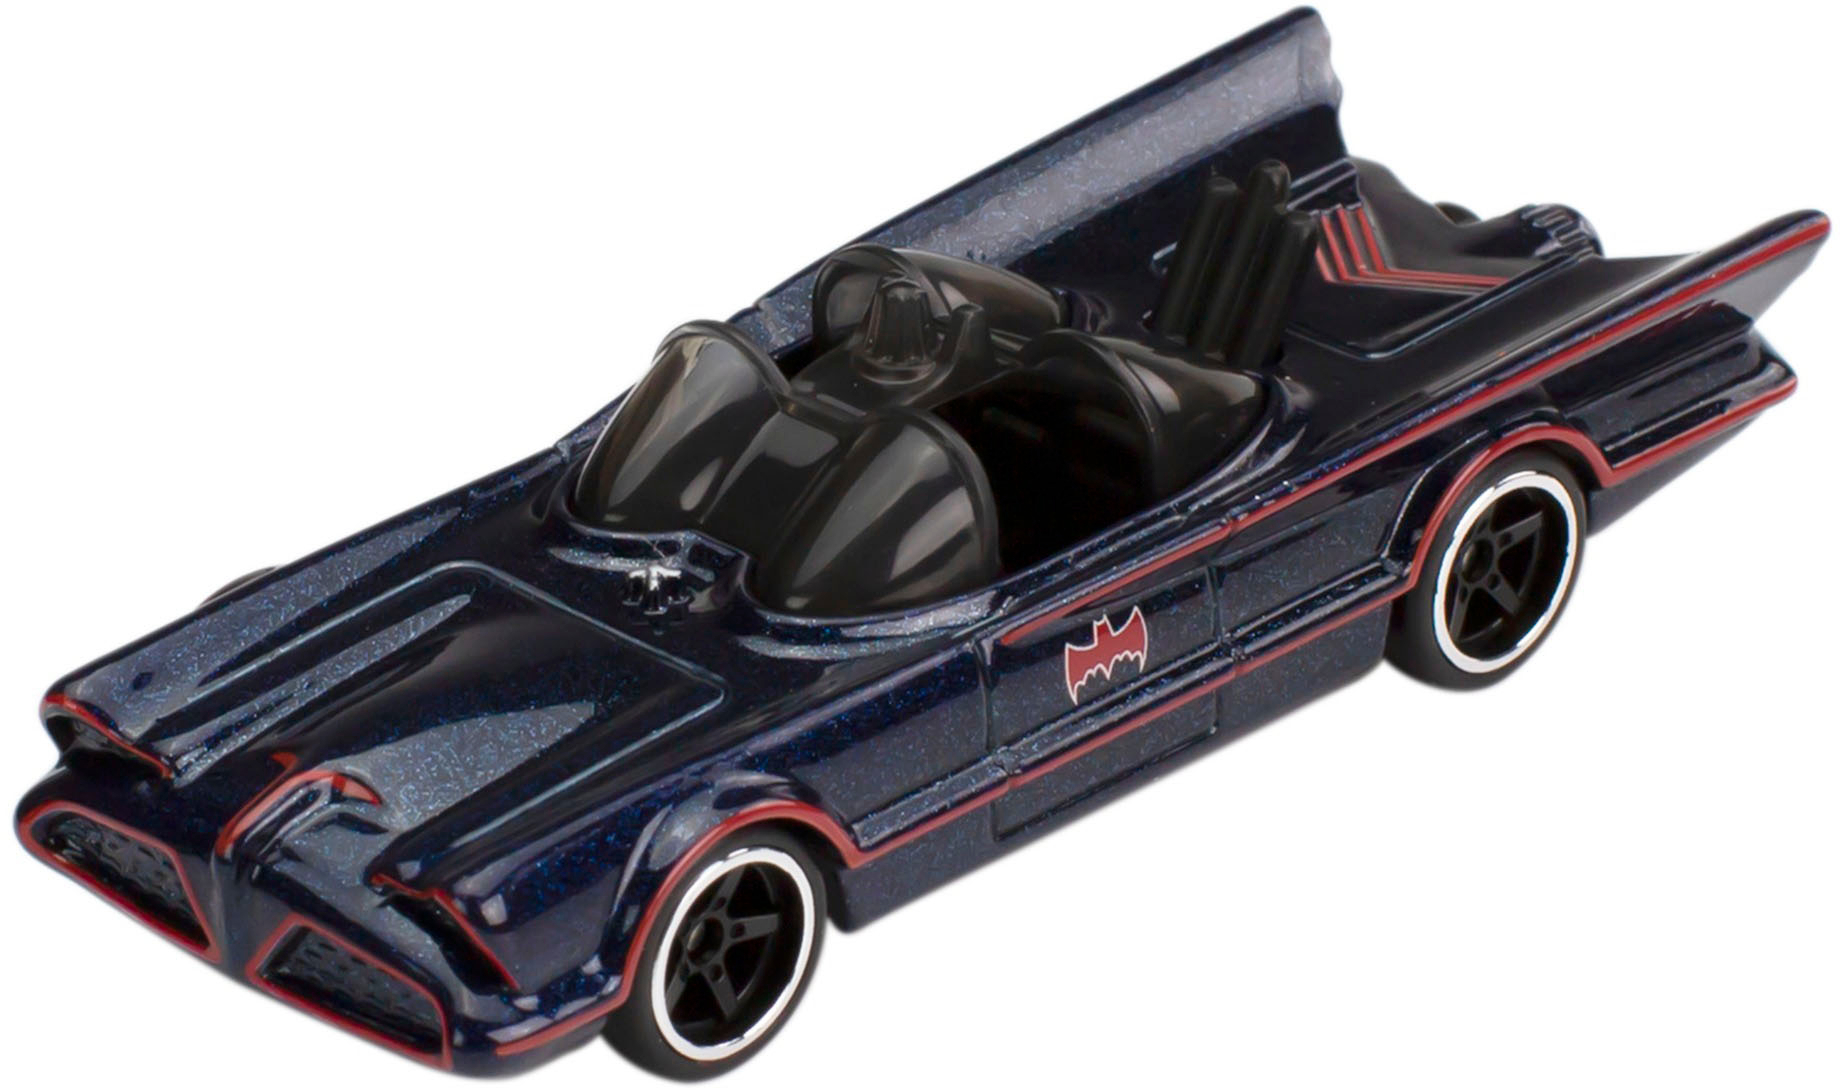  Hot Wheels Batman 5 Car Set Bundle Version 1 : Toys